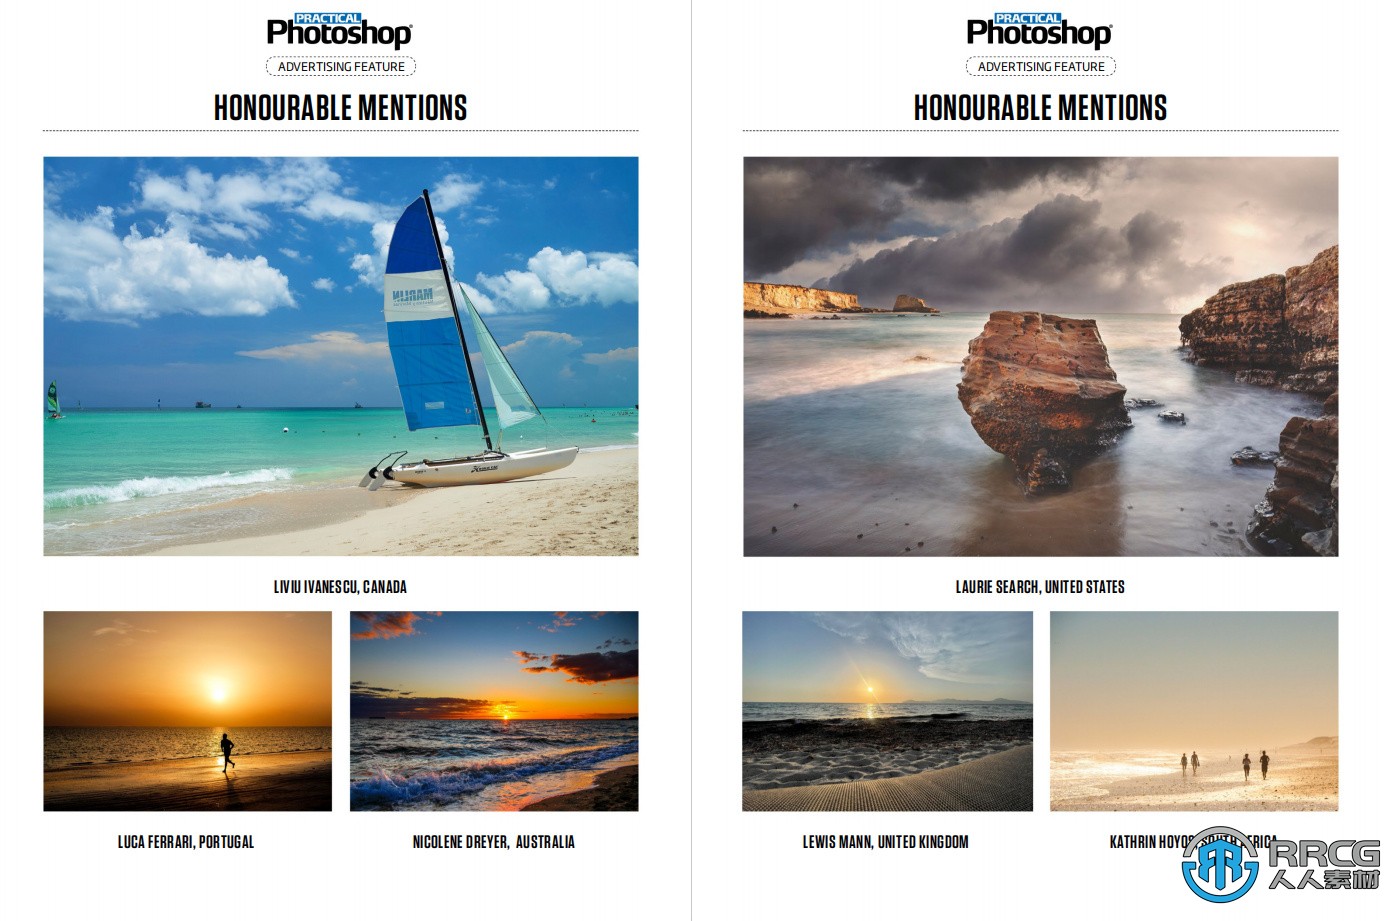 Photoshop技术指南杂志2022年11月刊